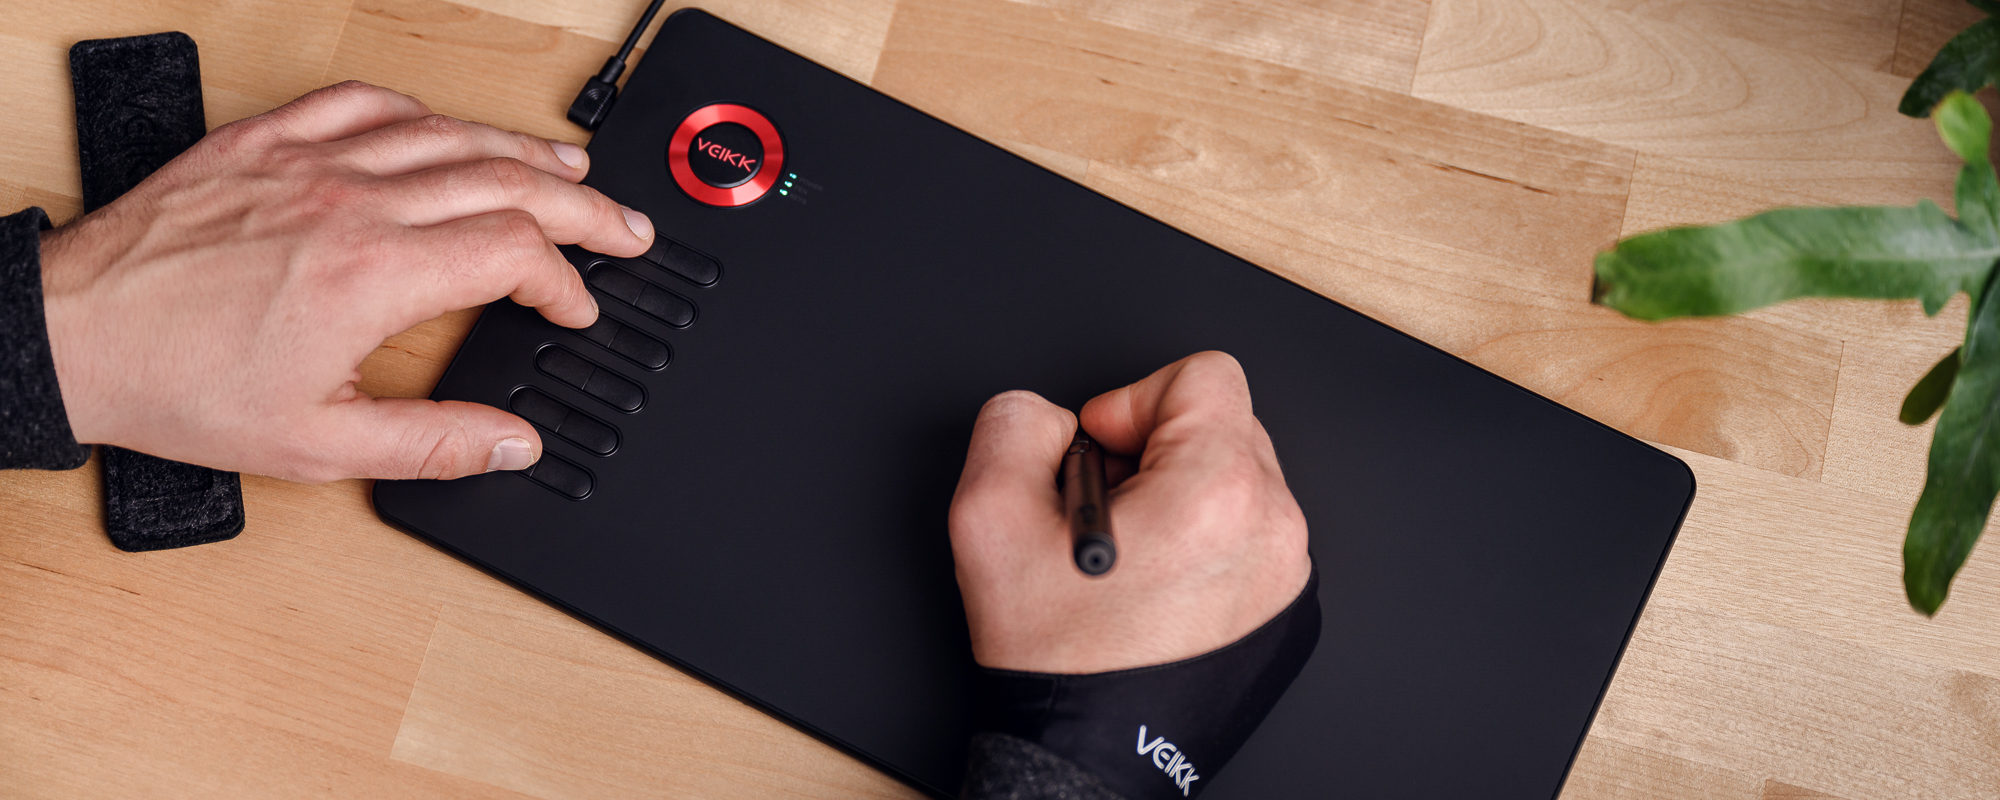 Photo - Veikk A15 graphics tablet on light brown desk, man's left hand pressing function key, right hand operates pen